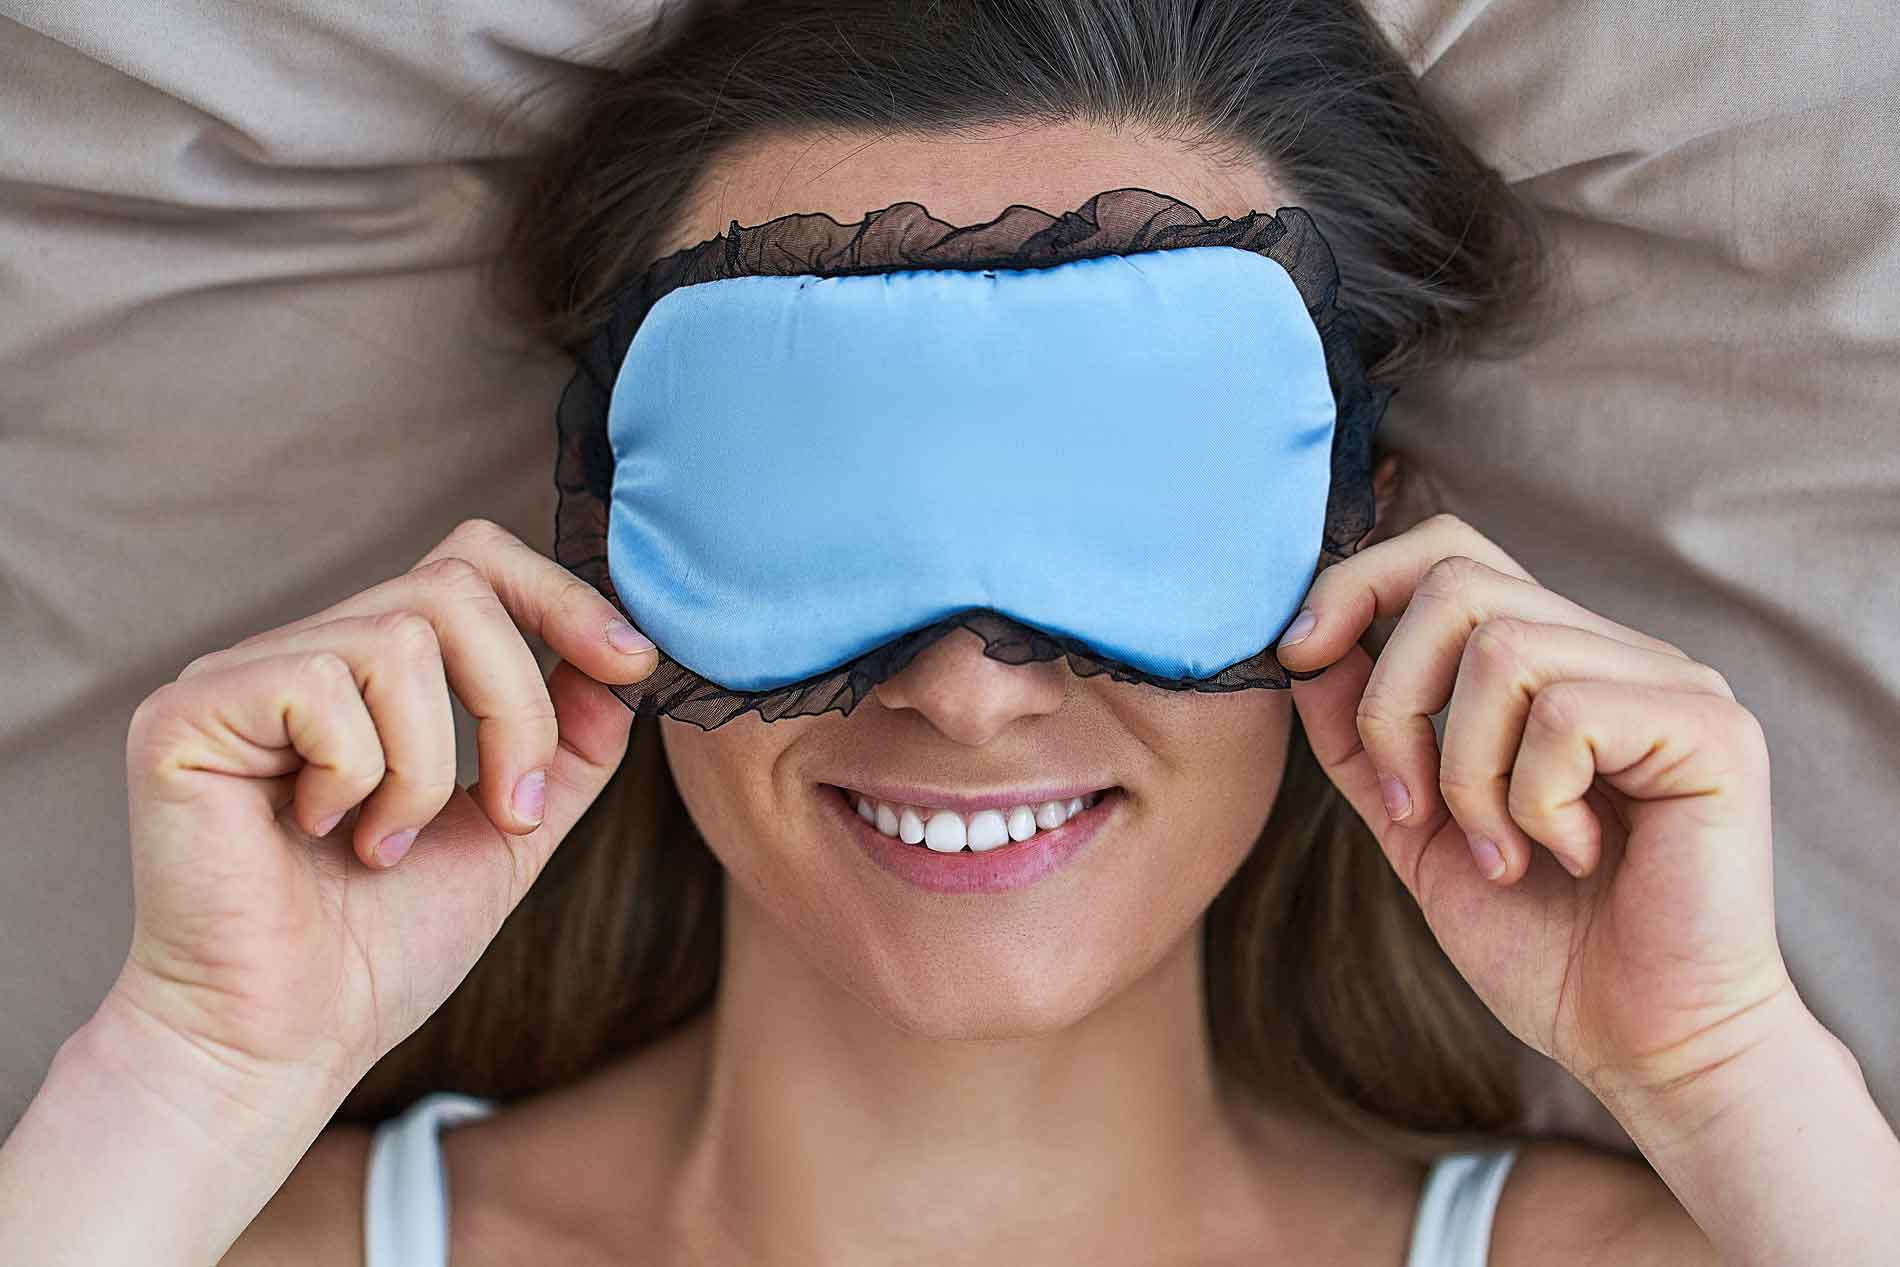 10 Ways To Get Better Sleep